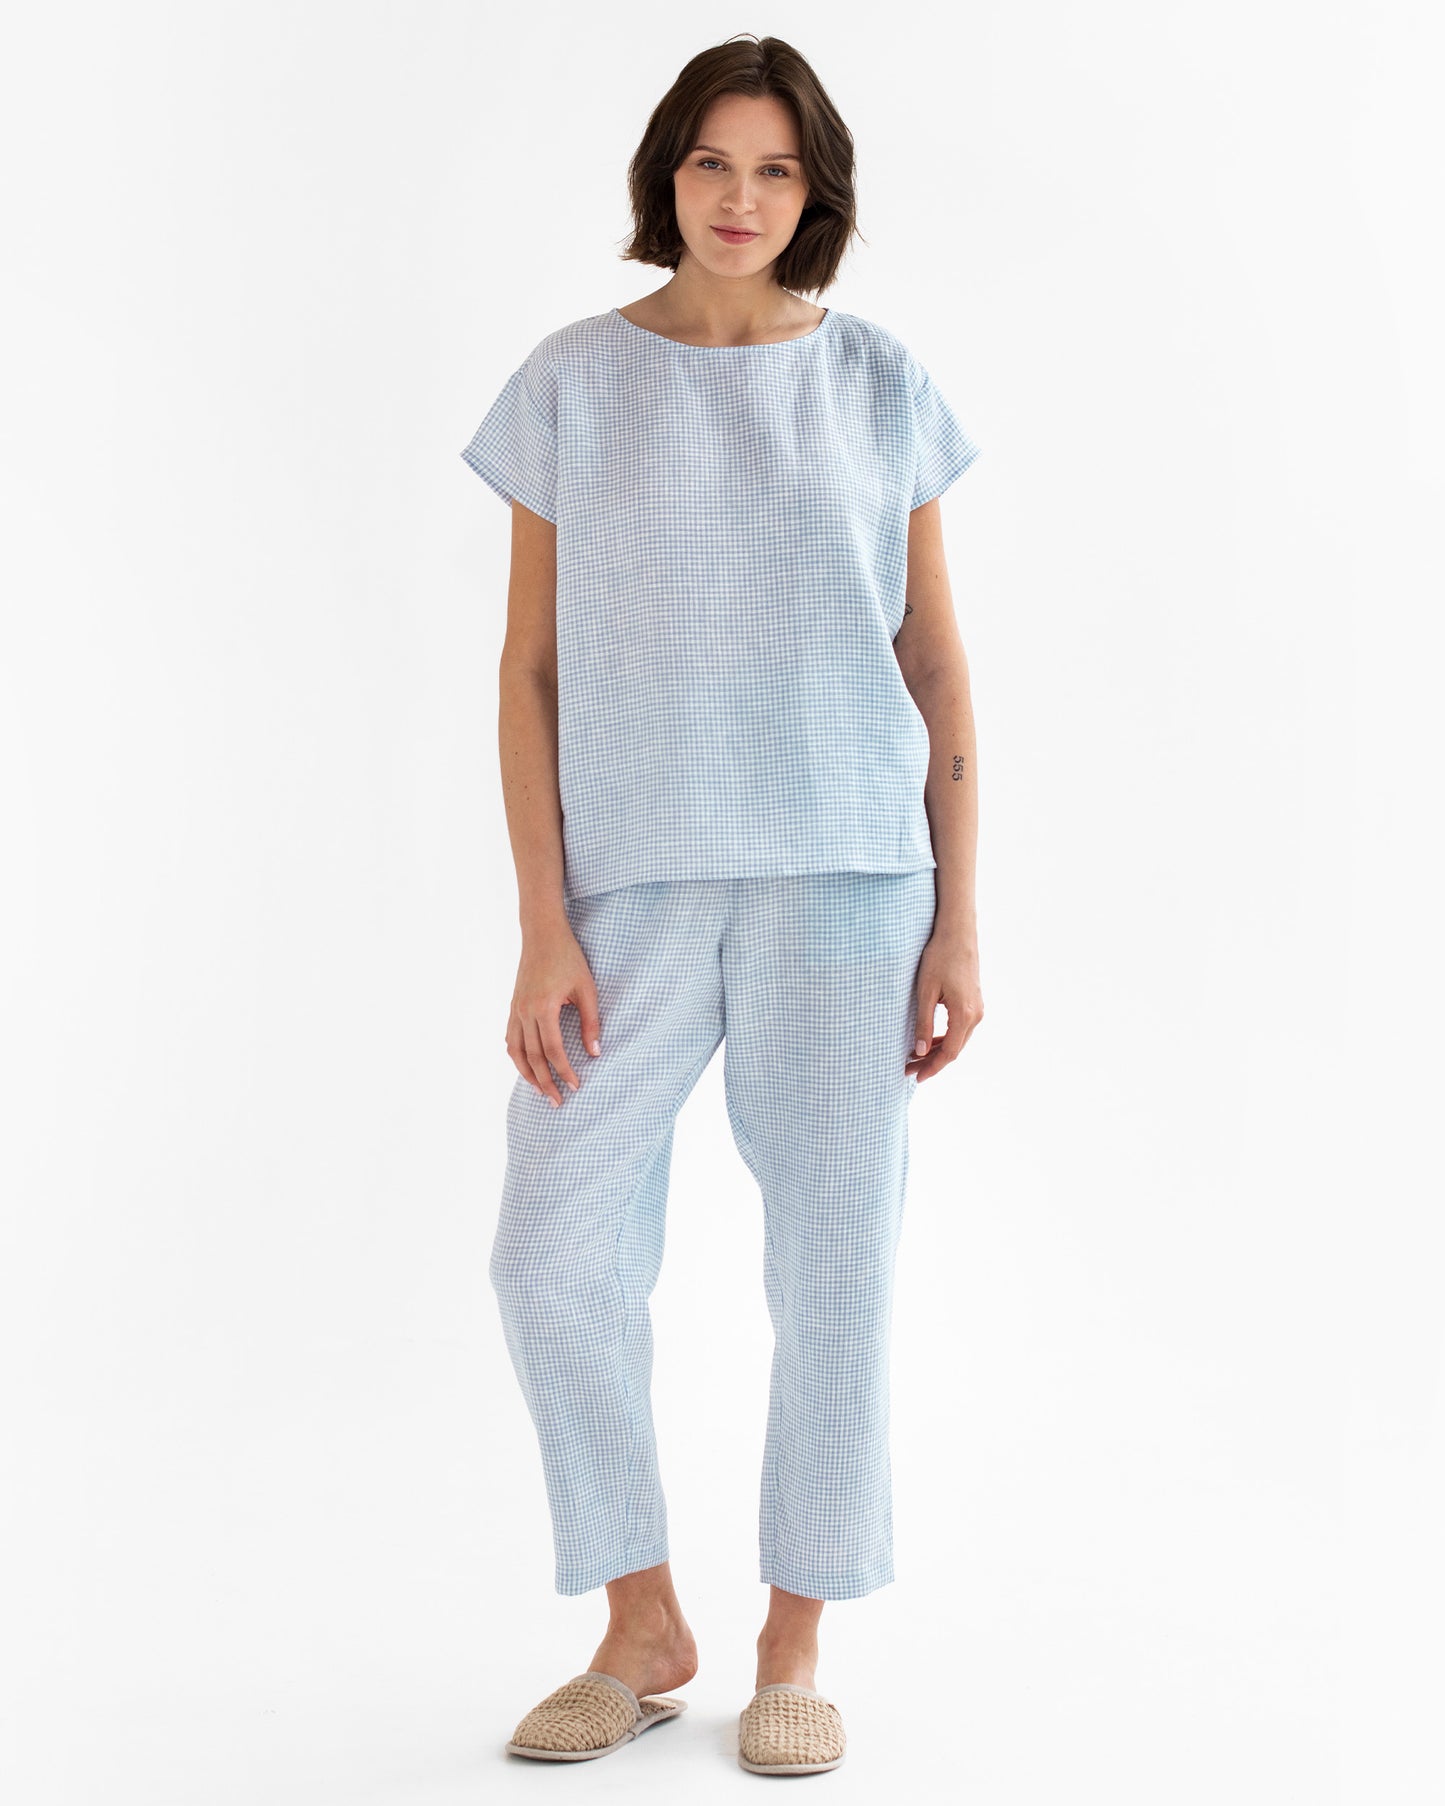 Women's Linen Pajama set RAVELLO in Blue Gingham | MagicLinen